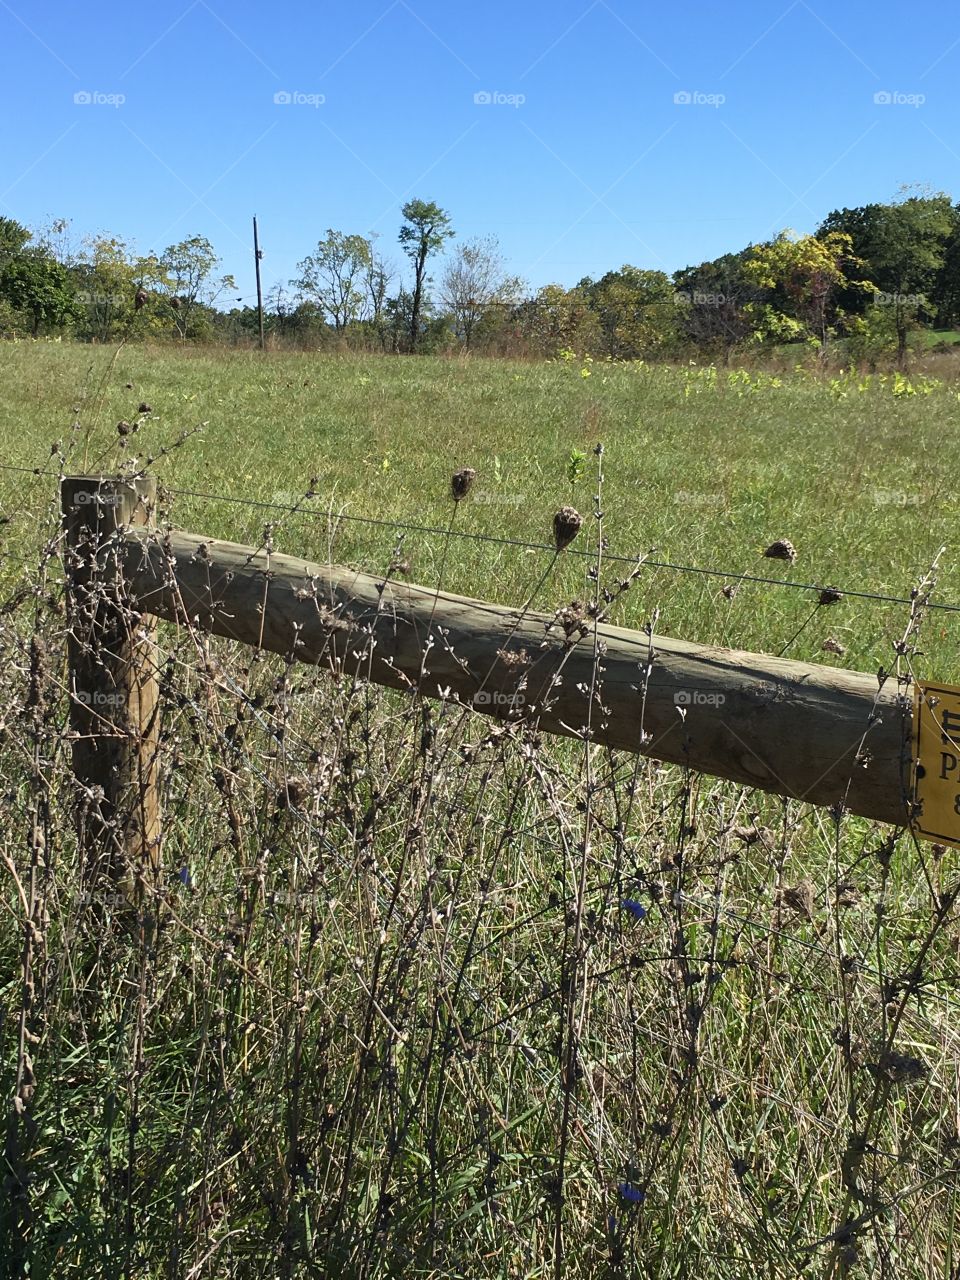 Fence weeds